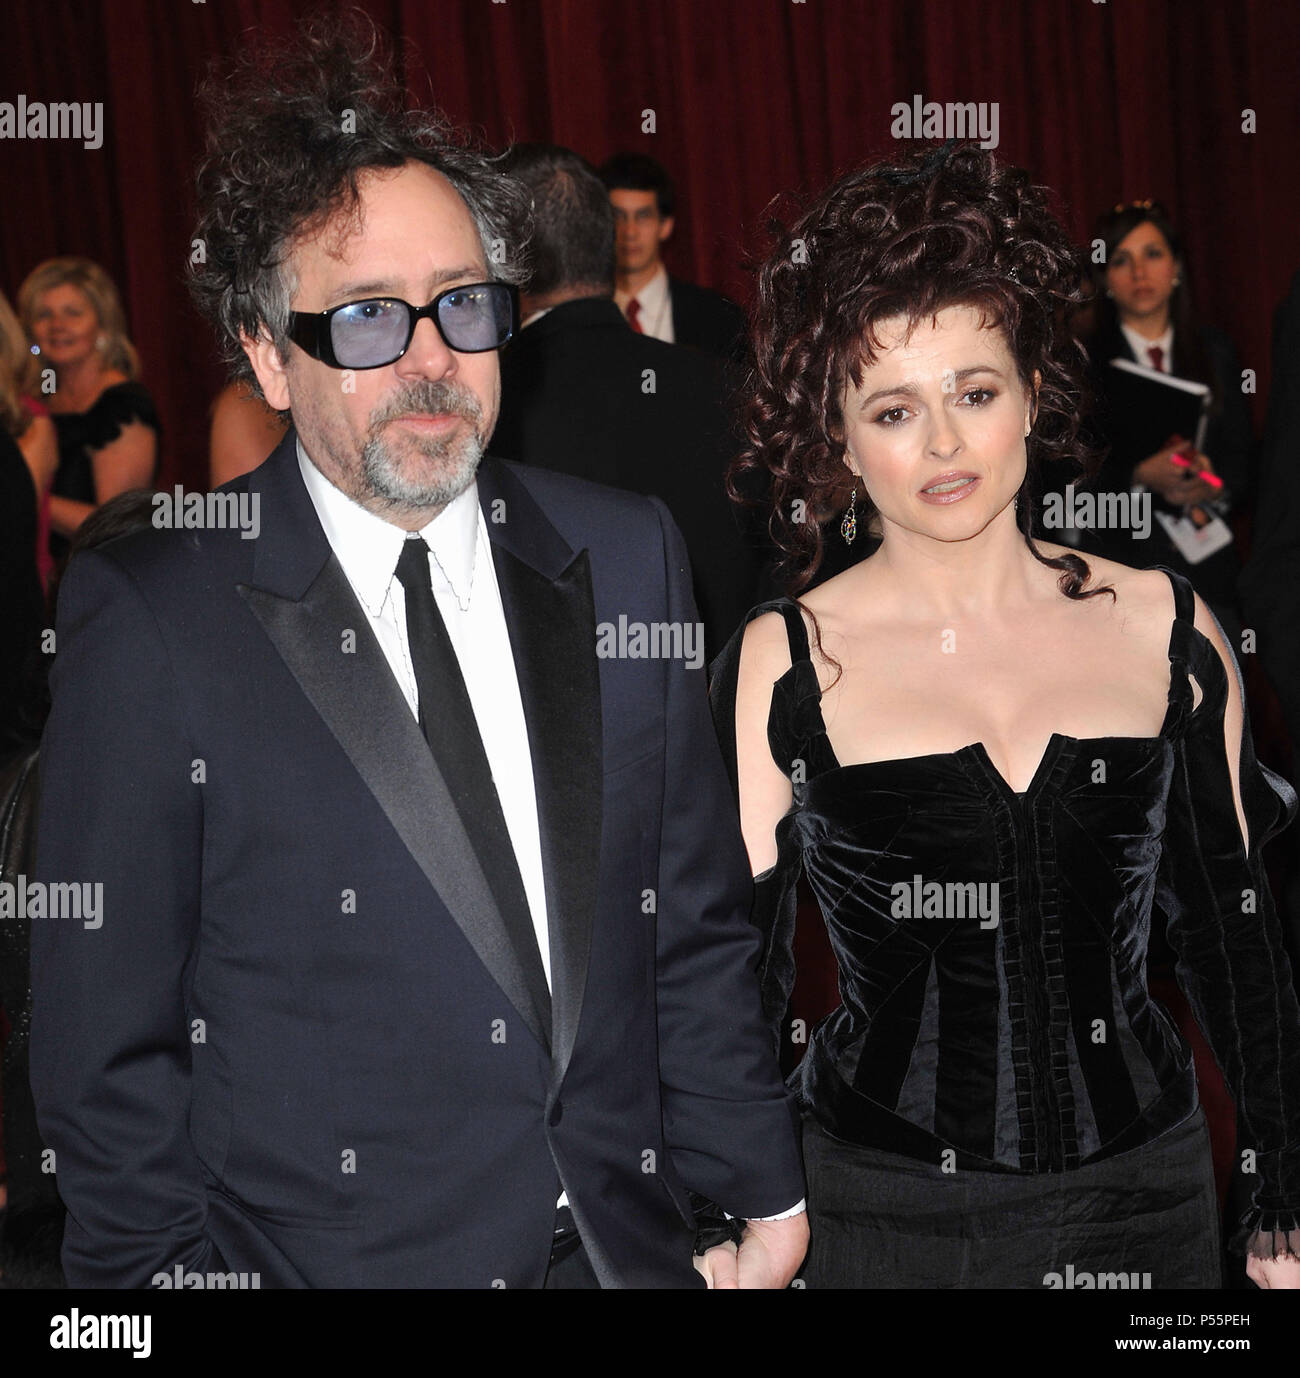 Tim Burton & Helena Bonham Carter 01 at the 83th Academy Awards at the  Kodak Theatre In Los Angeles.Tim Burton & Helena Bonham Carter 01  ------------- Red Carpet Event, Vertical, USA, Film